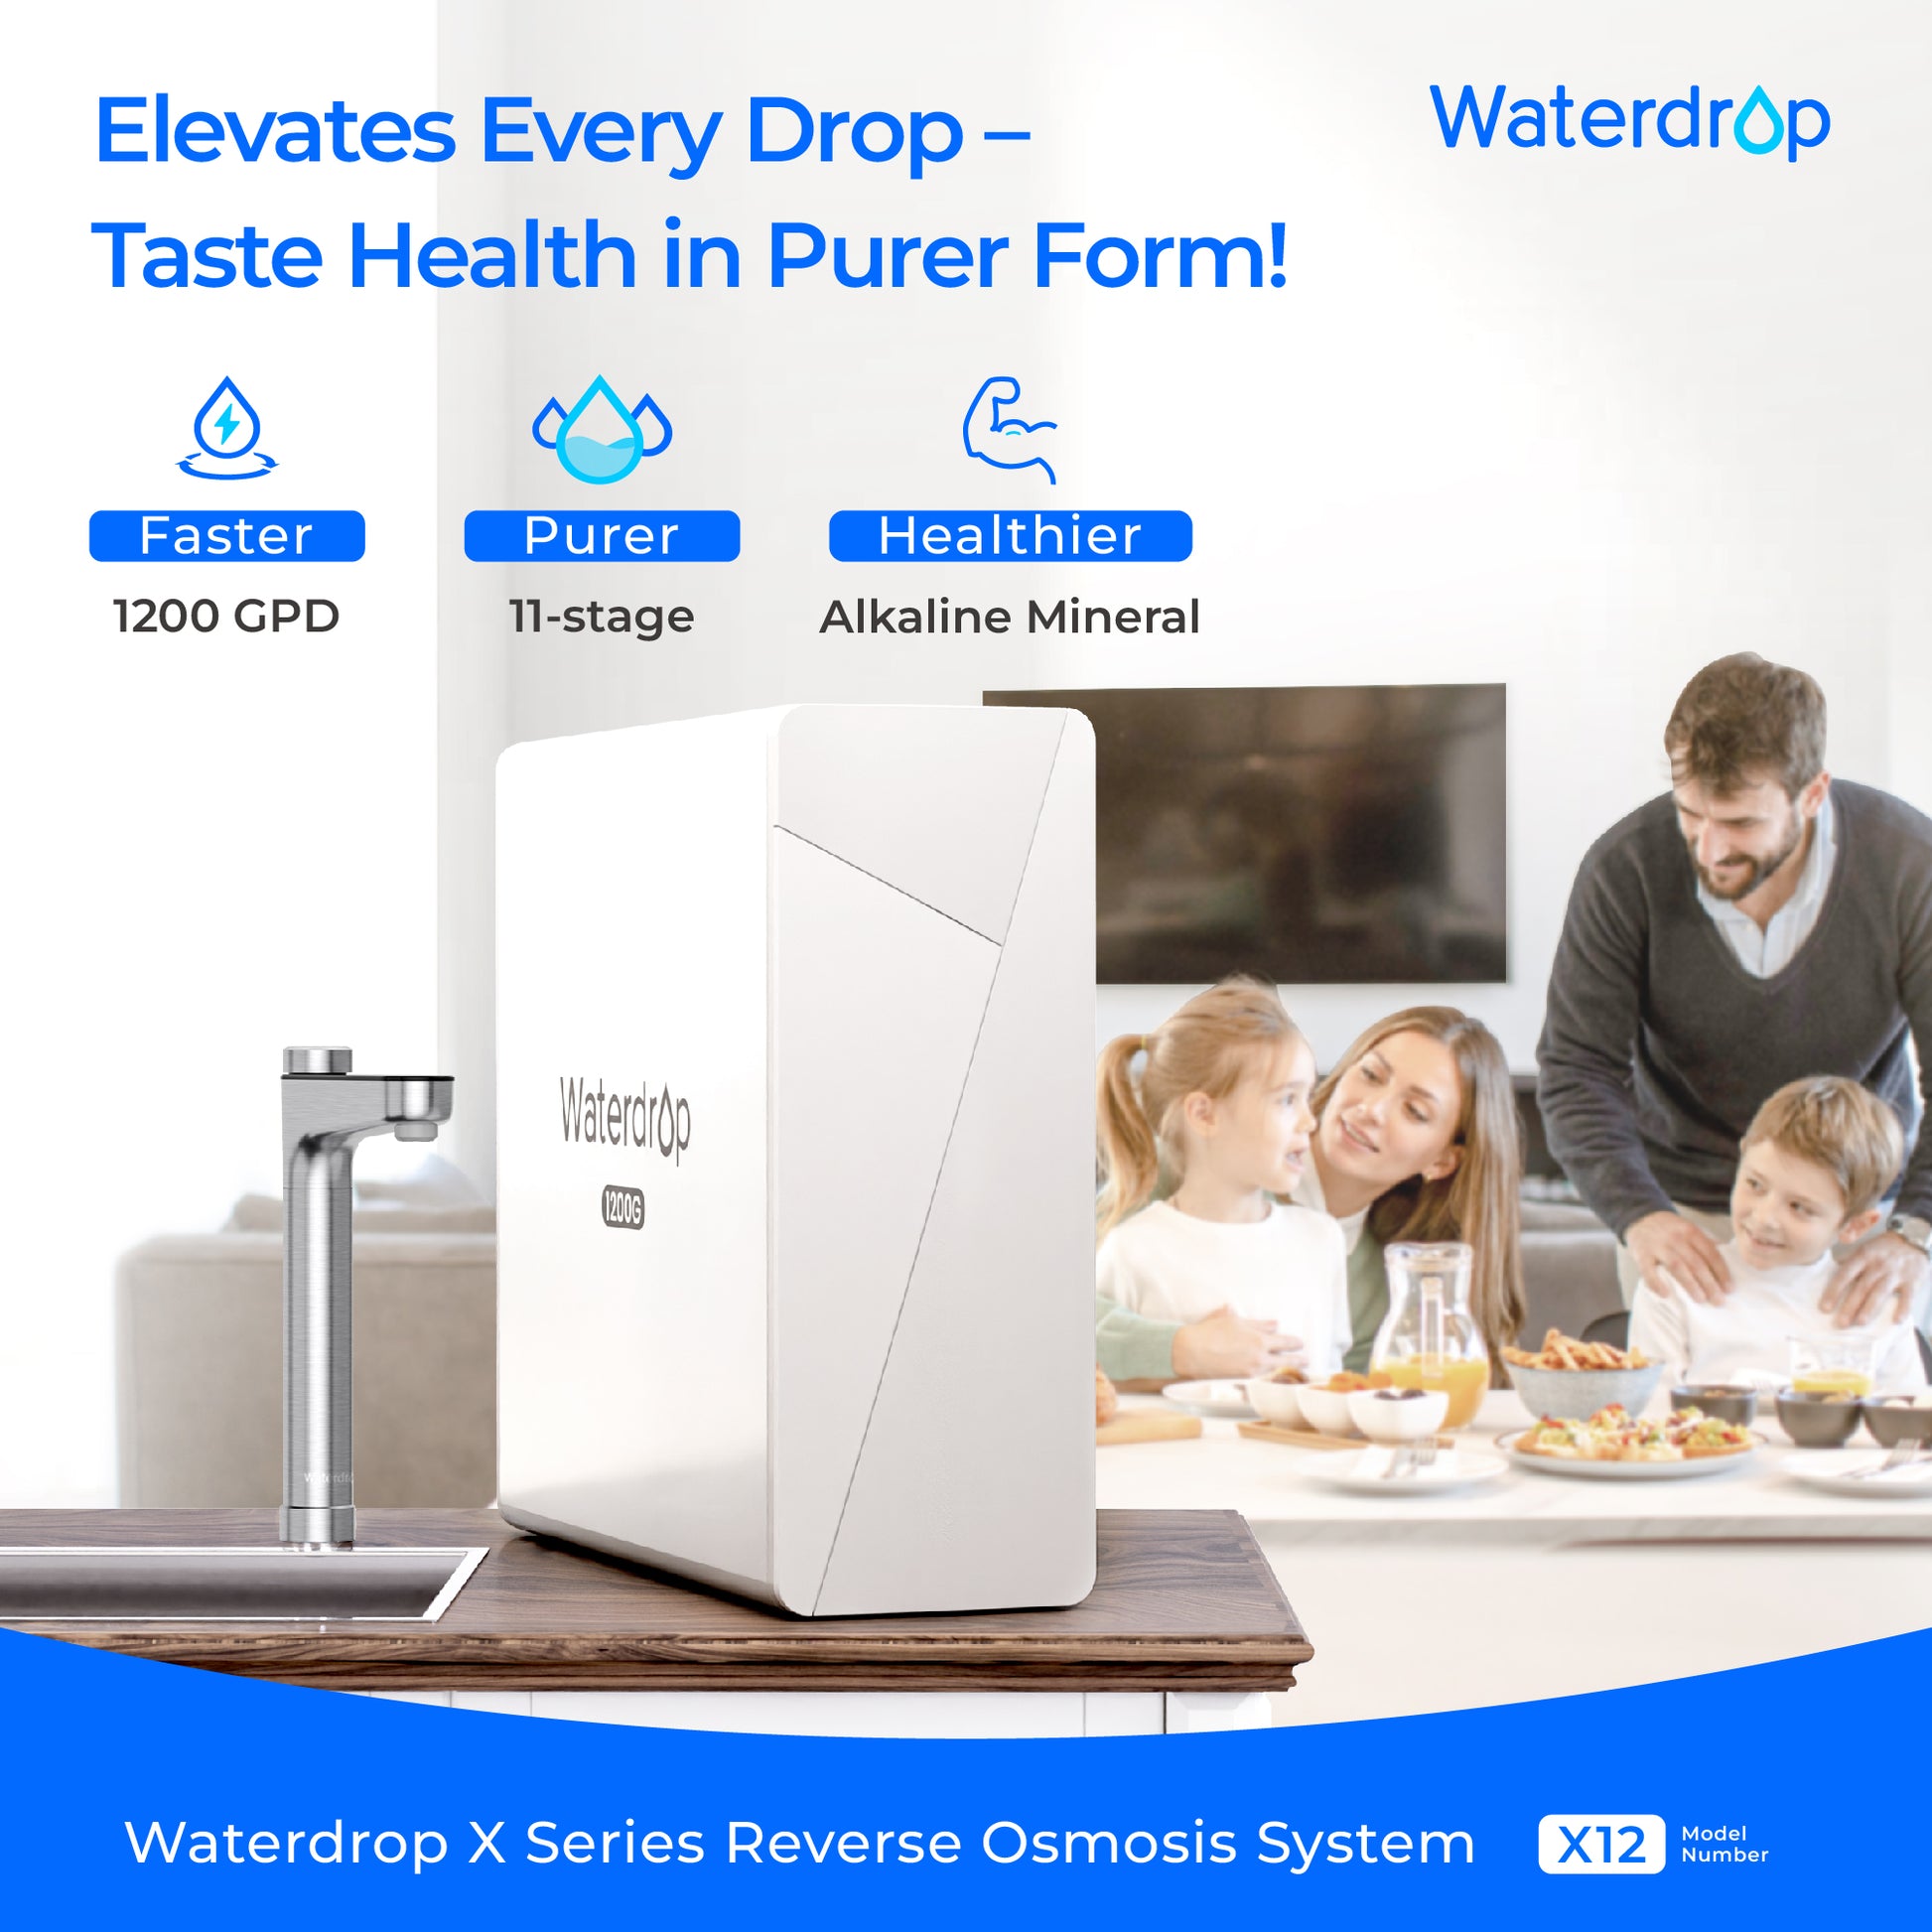 Waterdrop X Series Reverse Osmosis System, X12